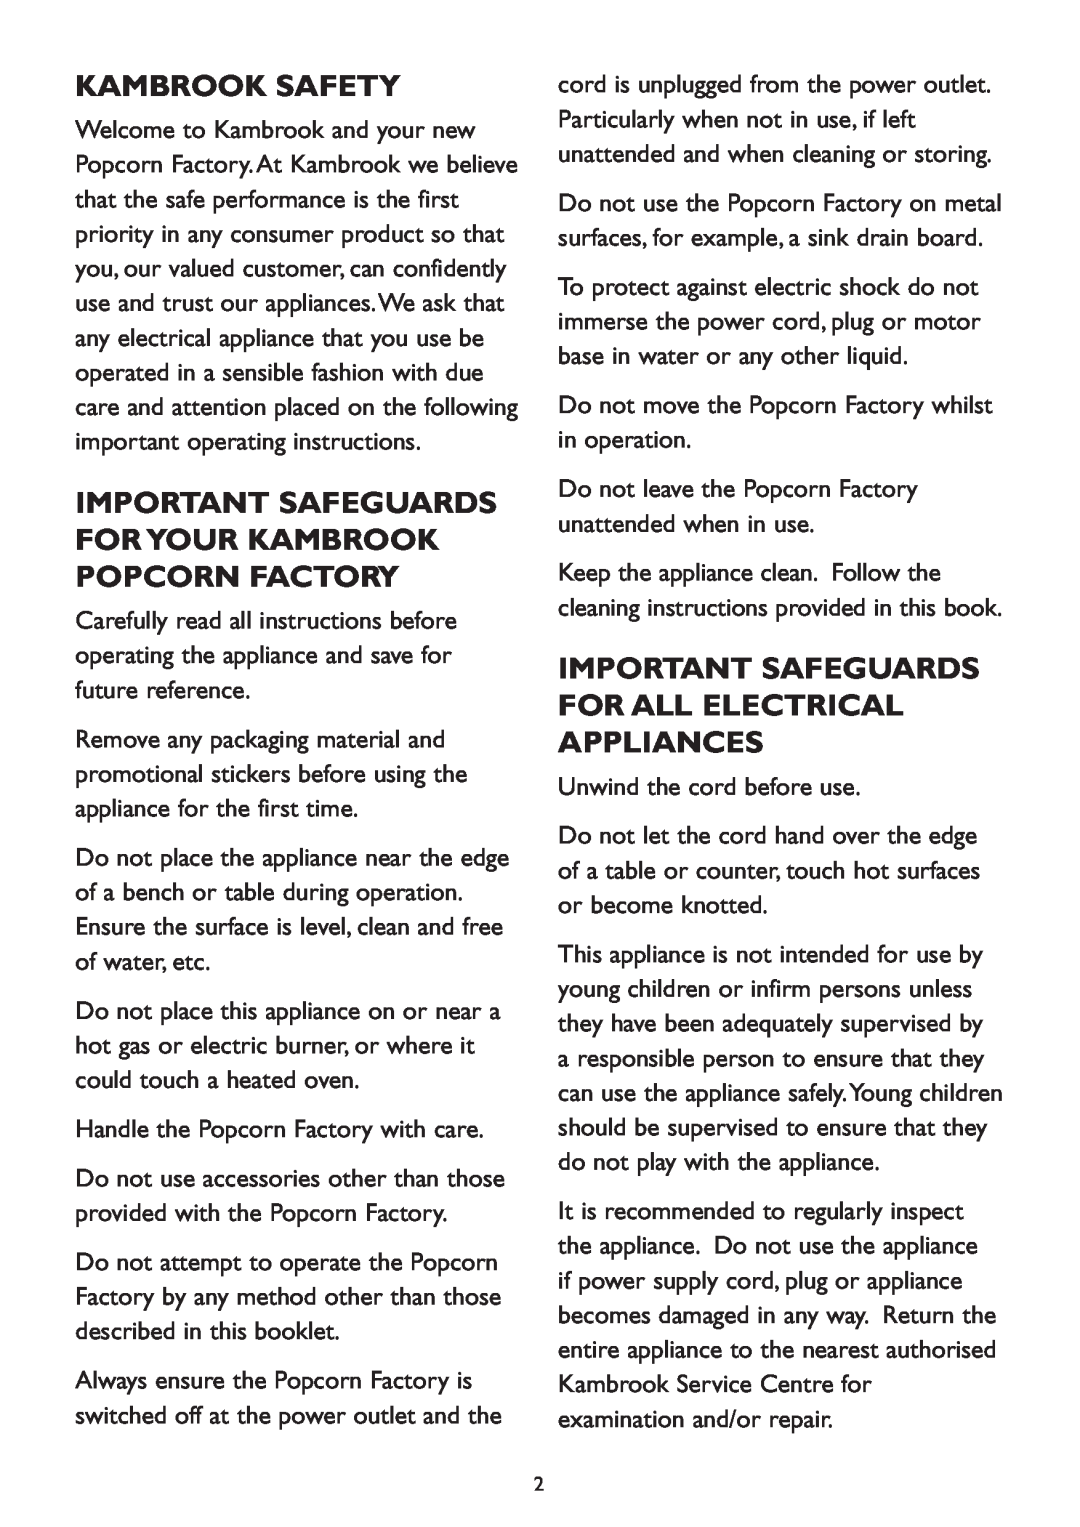 Kambrook KPC10 manual Kambrook Safety, Important Safeguards For Your Kambrook Popcorn Factory 